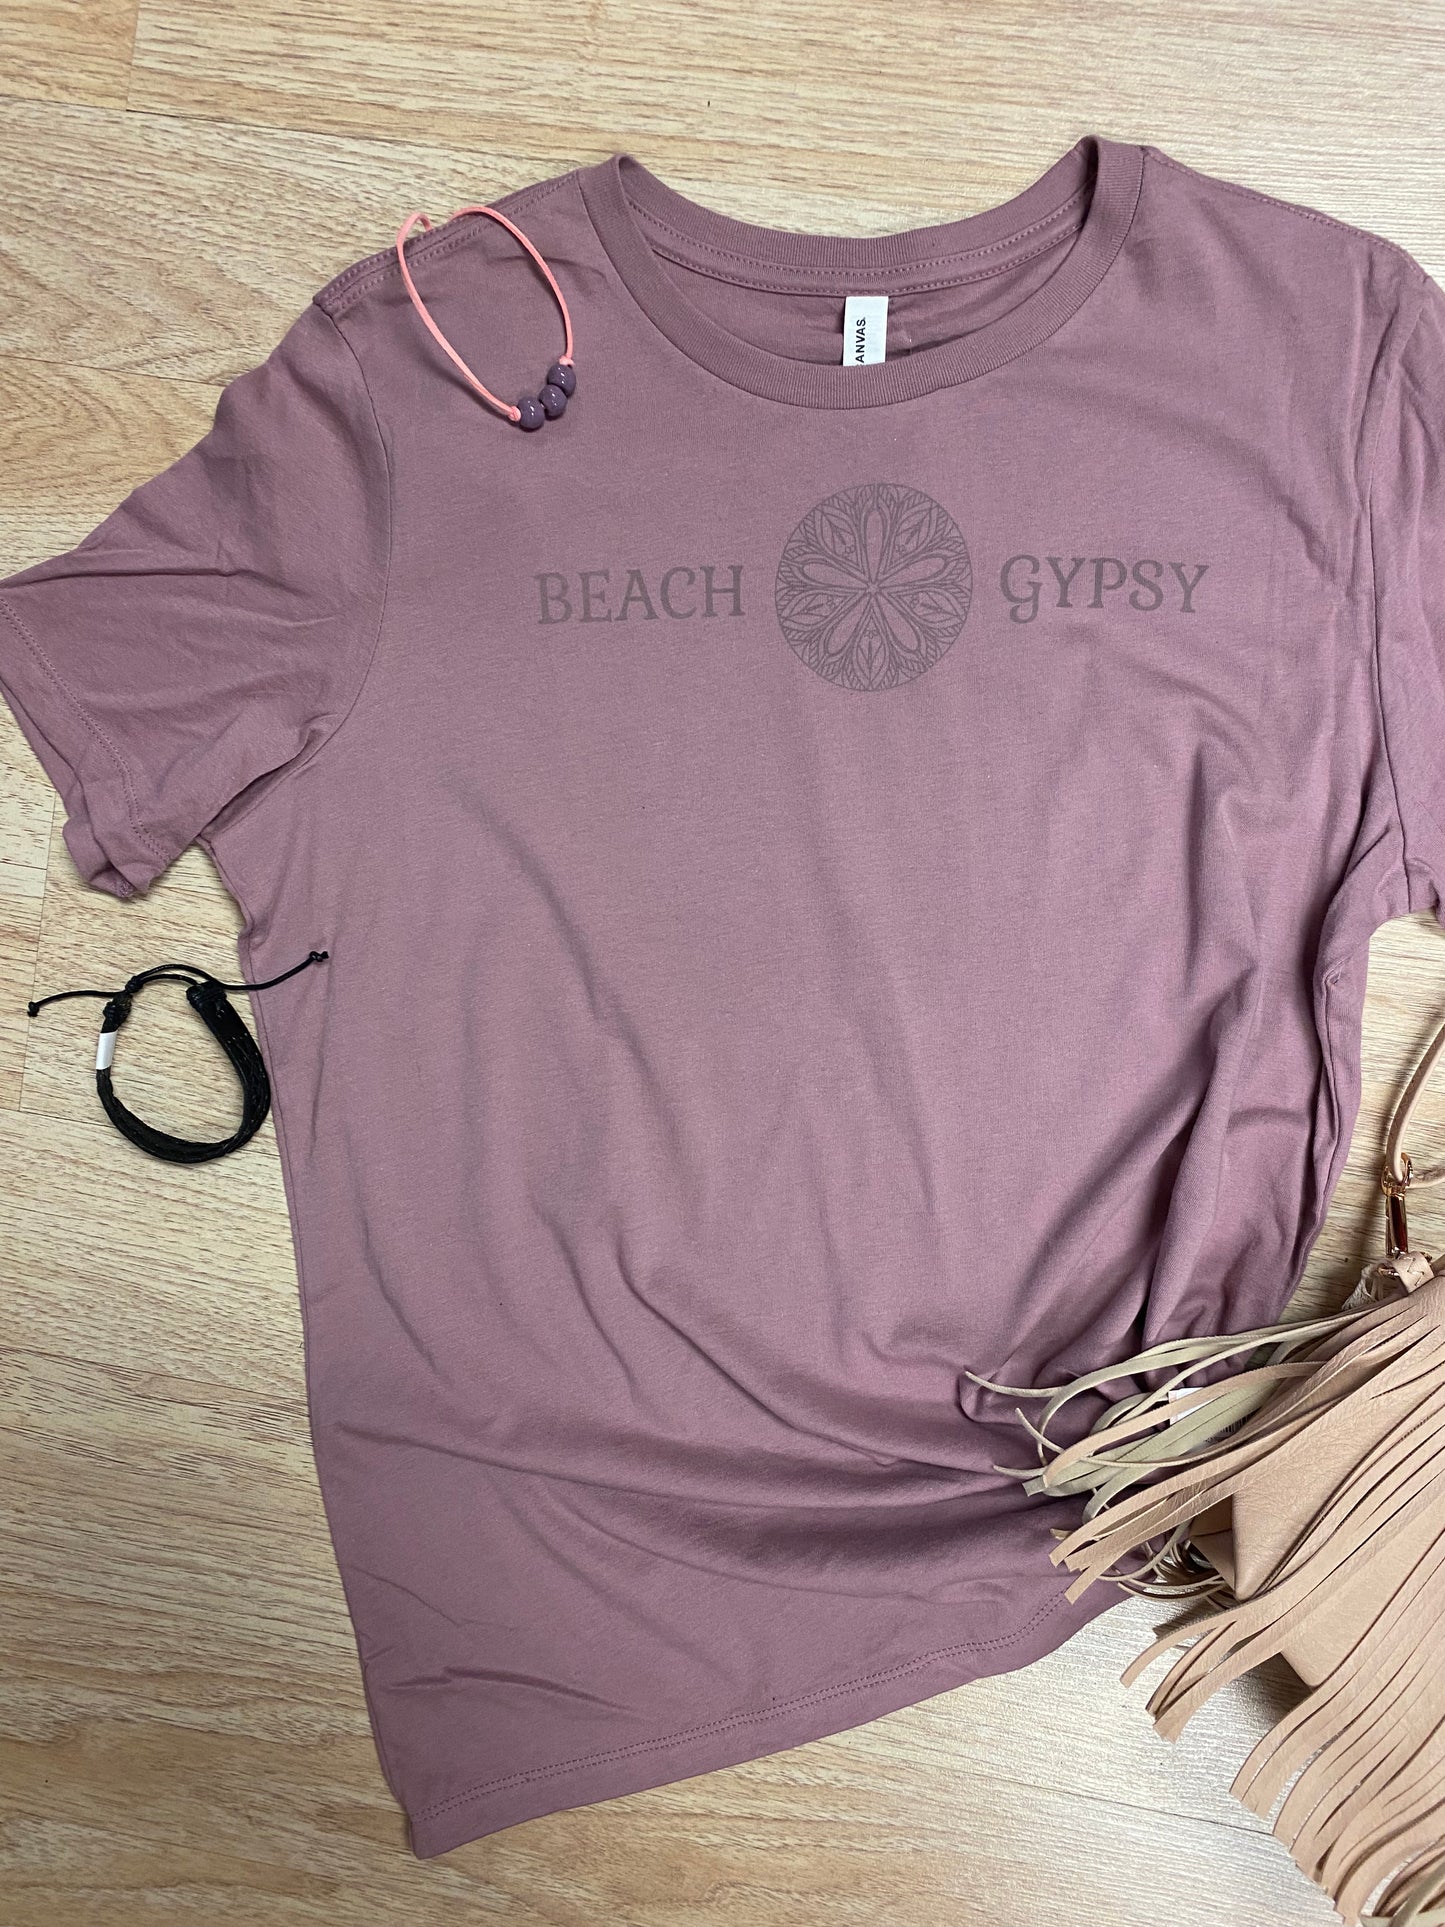 Beach Gypsy Tee